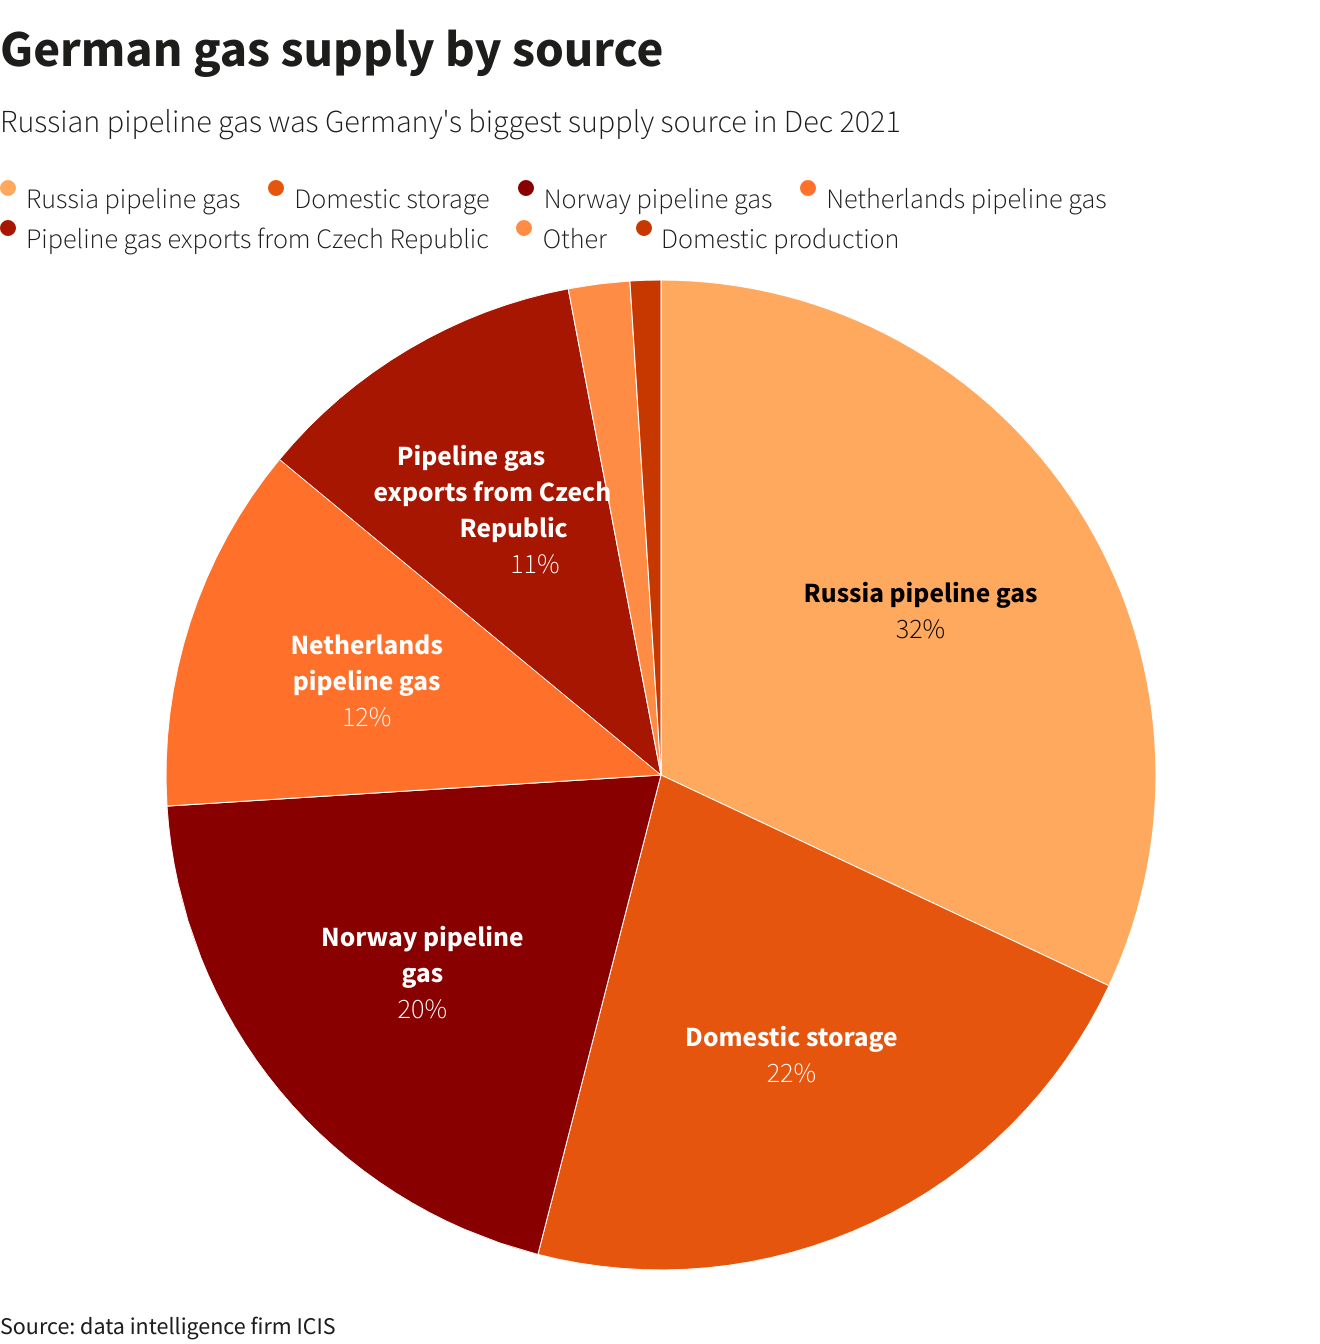 German gas supply by source, Dec 2021